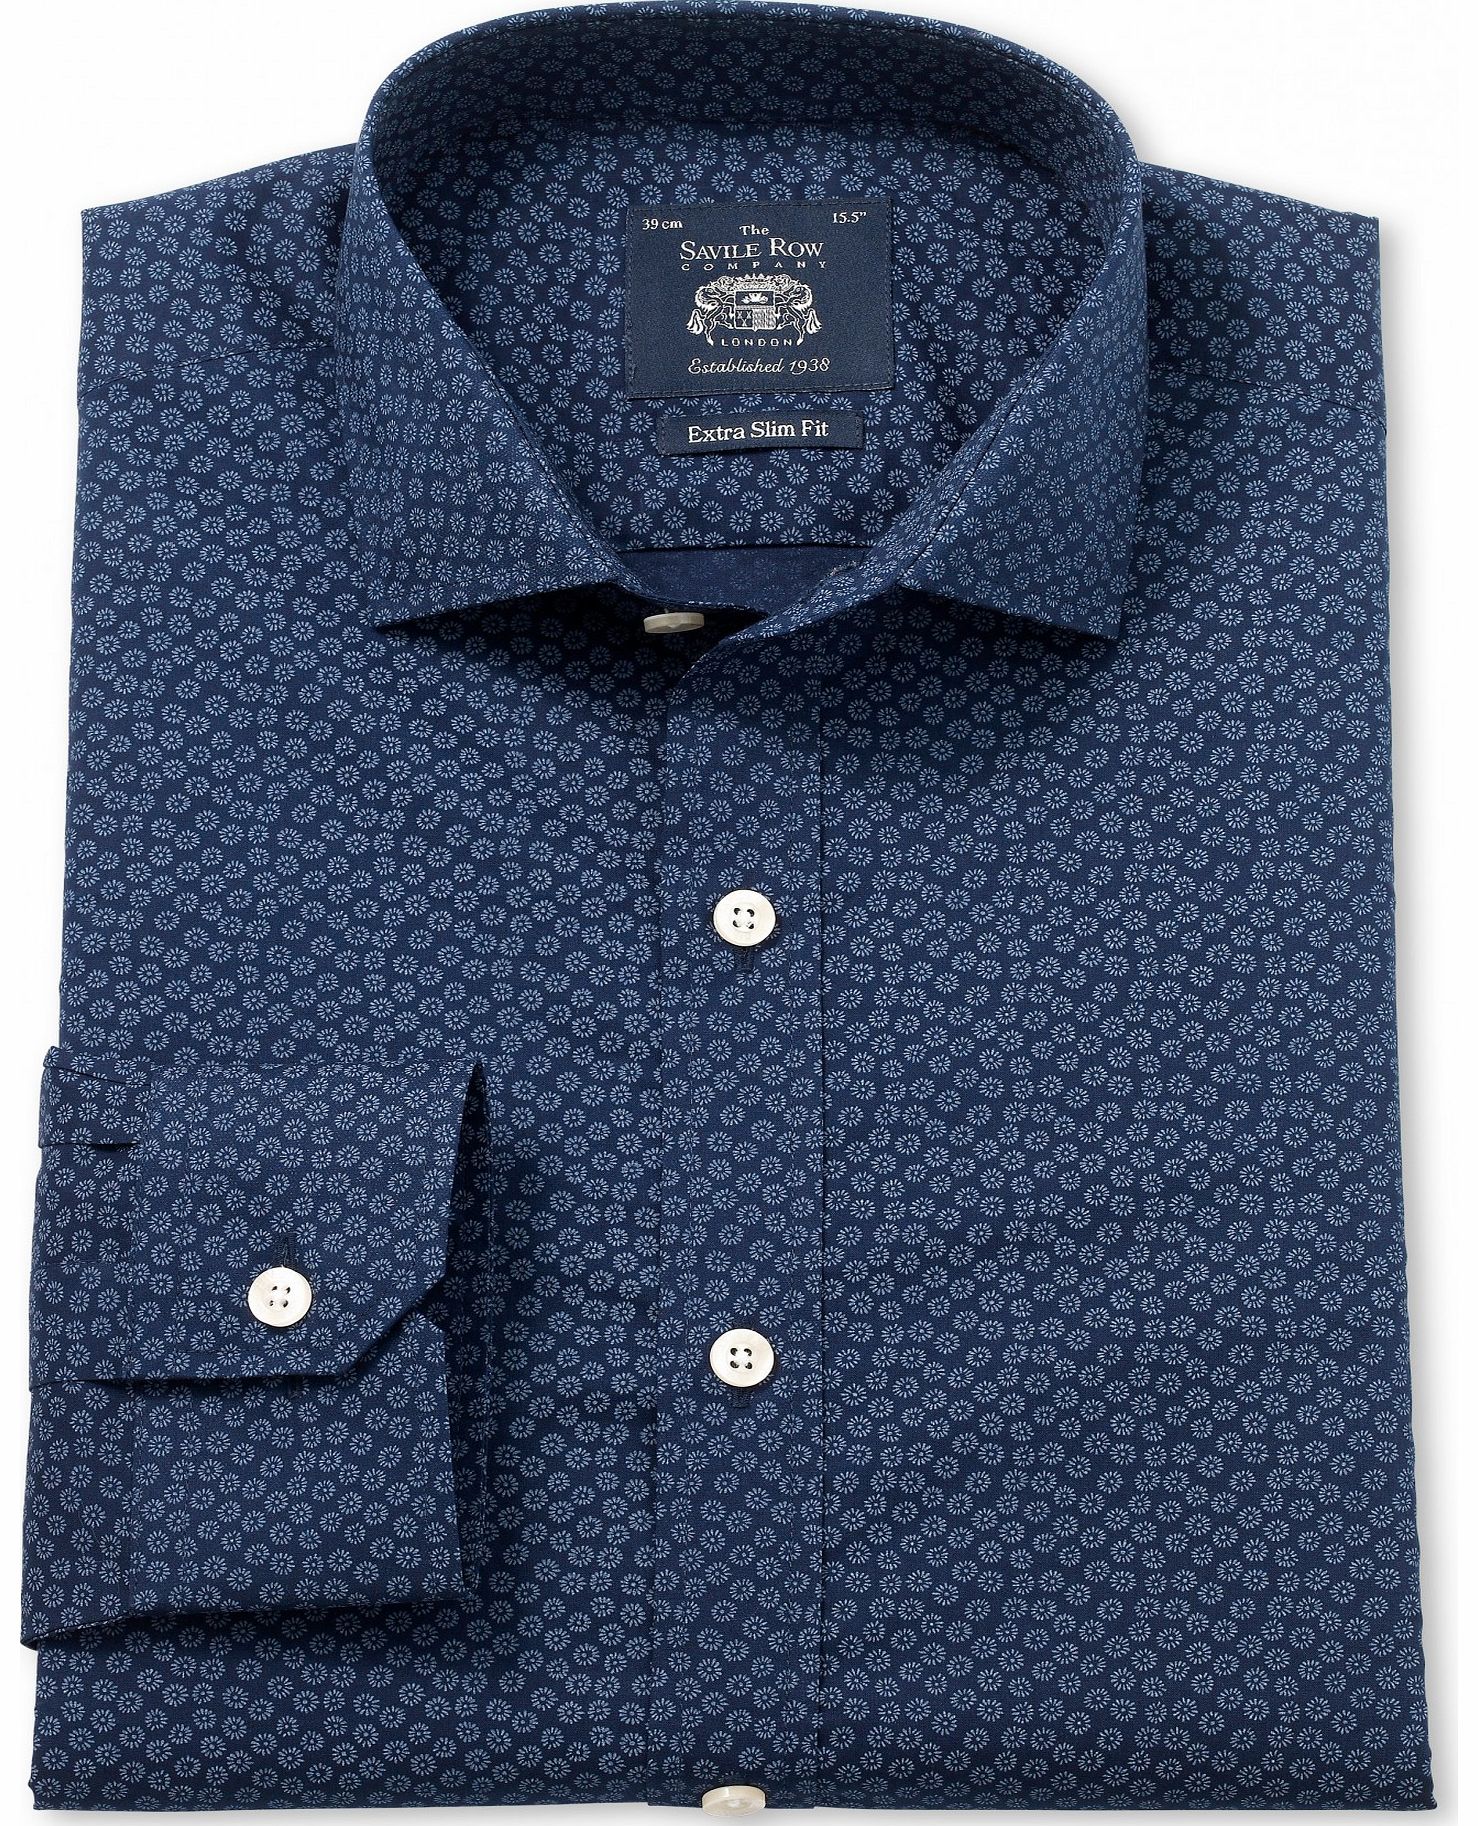 Navy Blue Printed Extra Slim Fit Shirt 16 1/2``